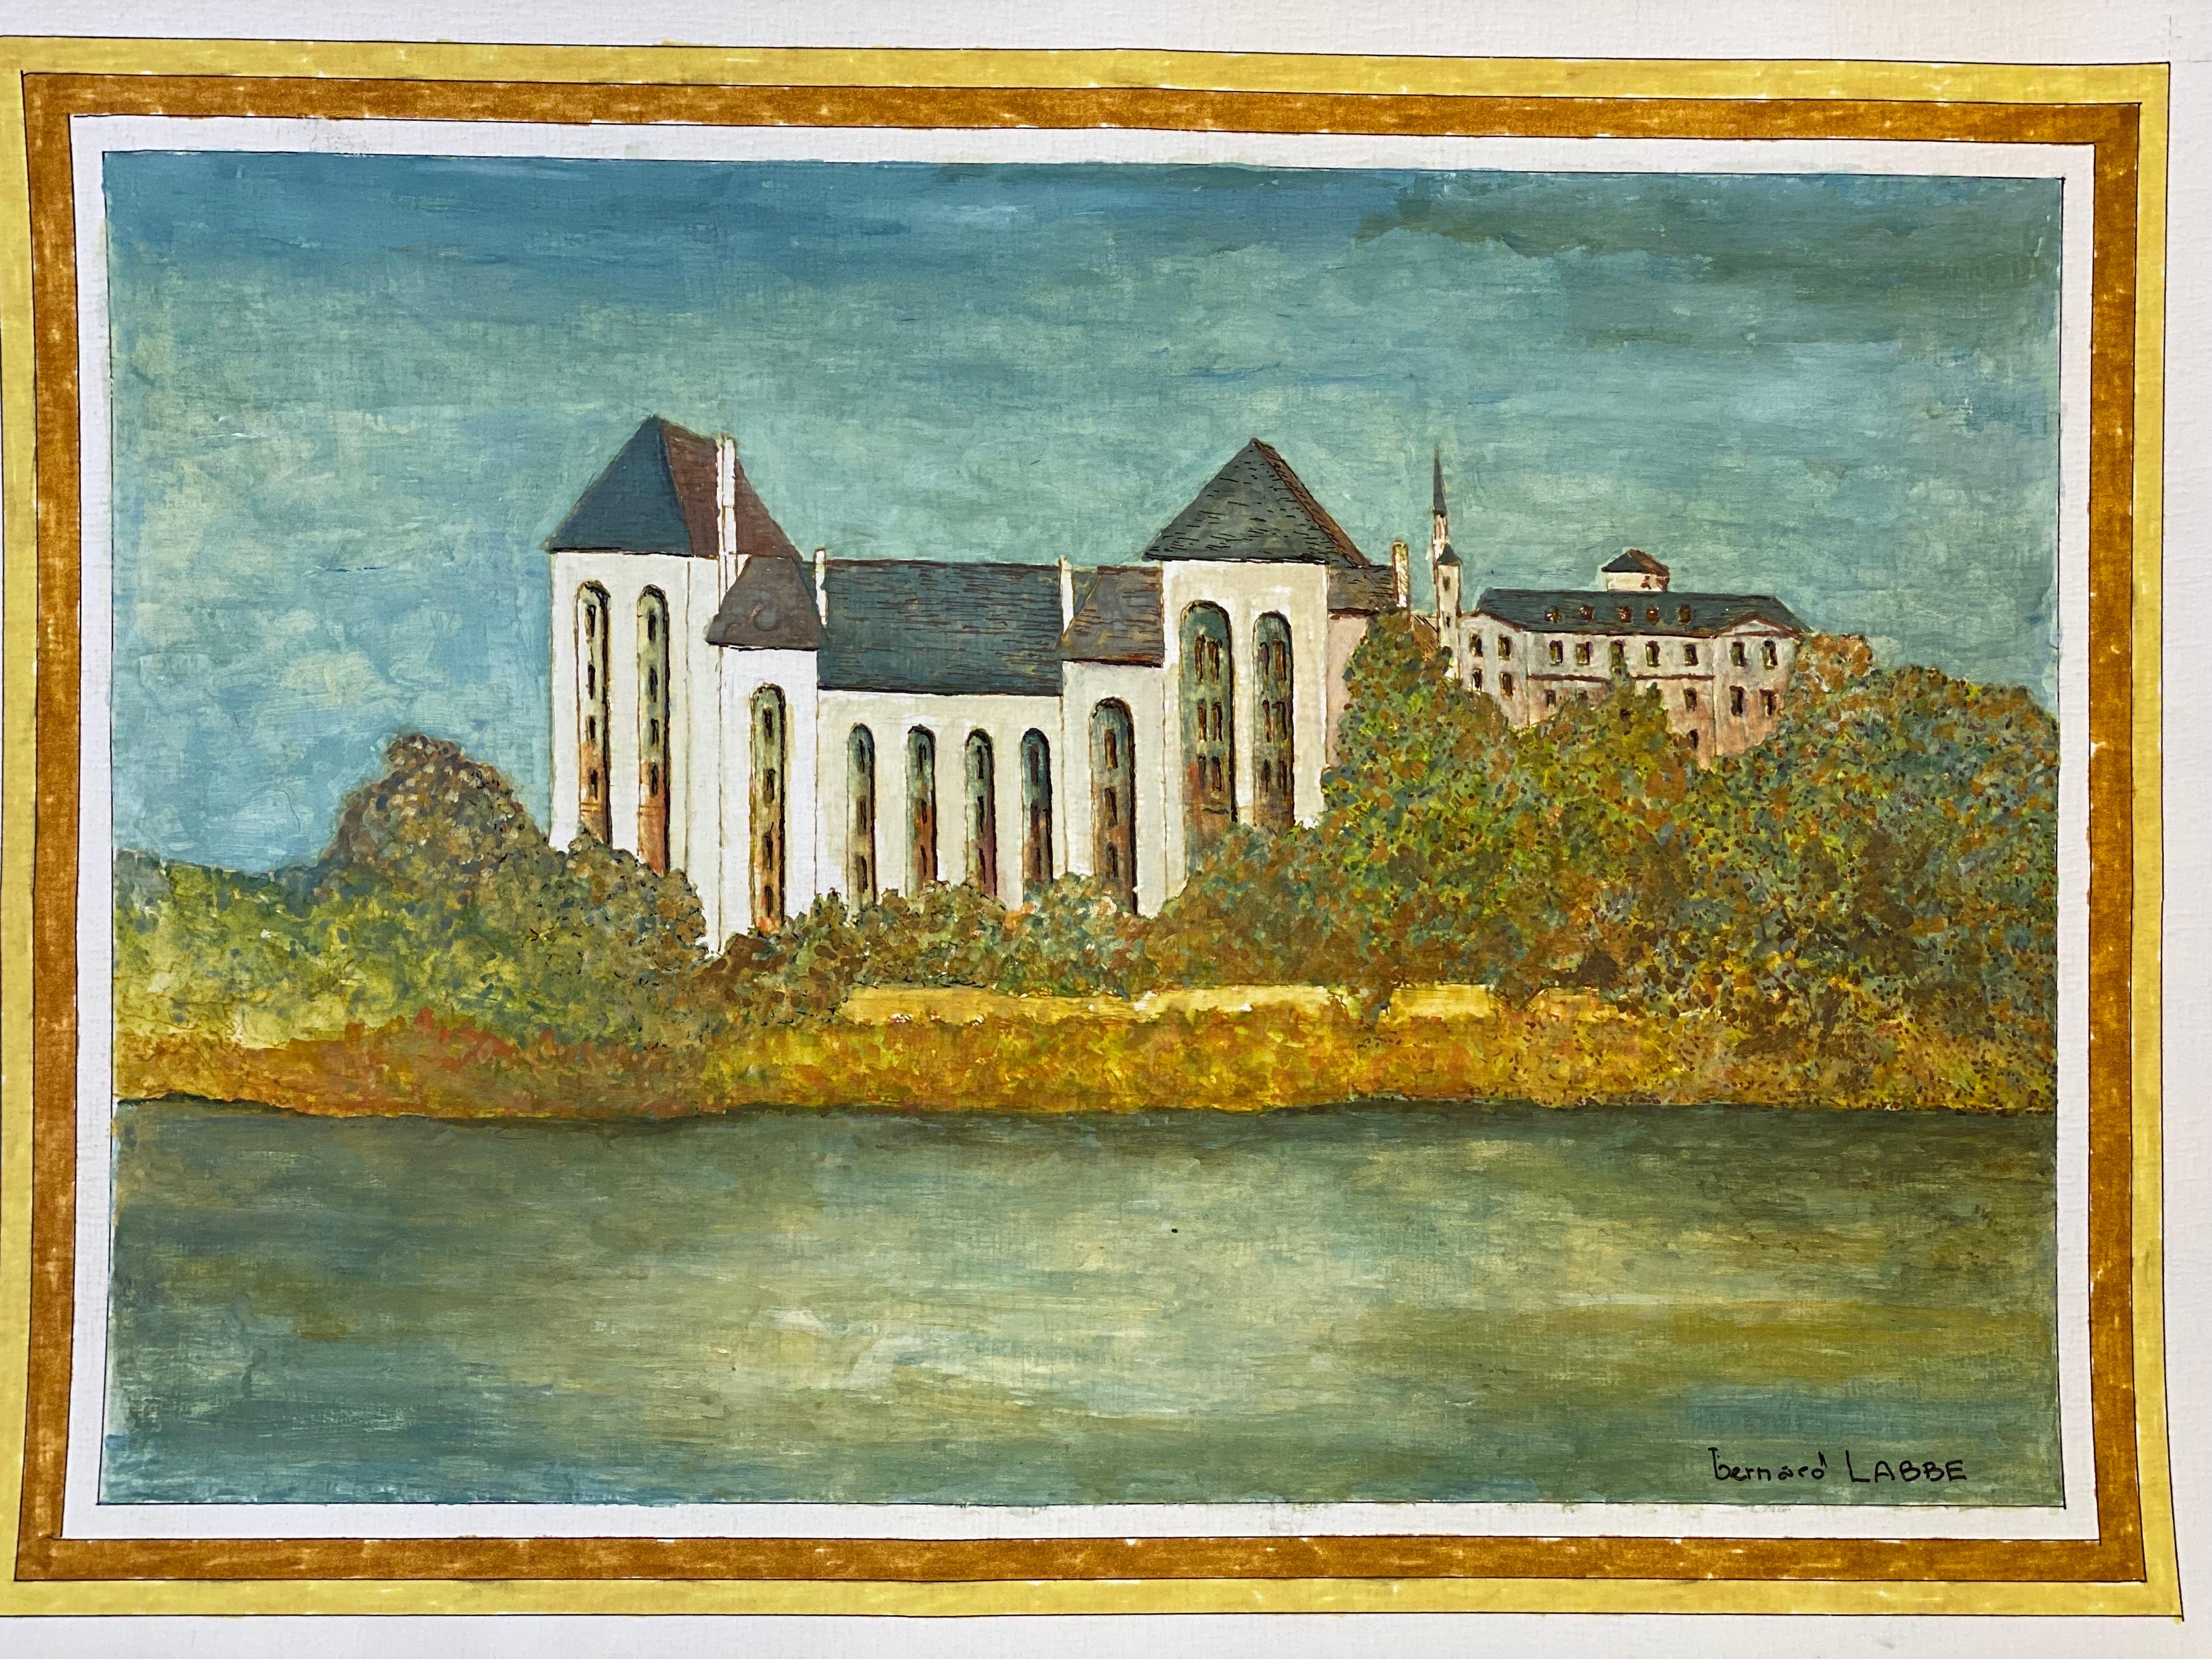 Bernard Labbe Landscape Art - 1950's Modernist Signed Painting  - Large French Building Over River